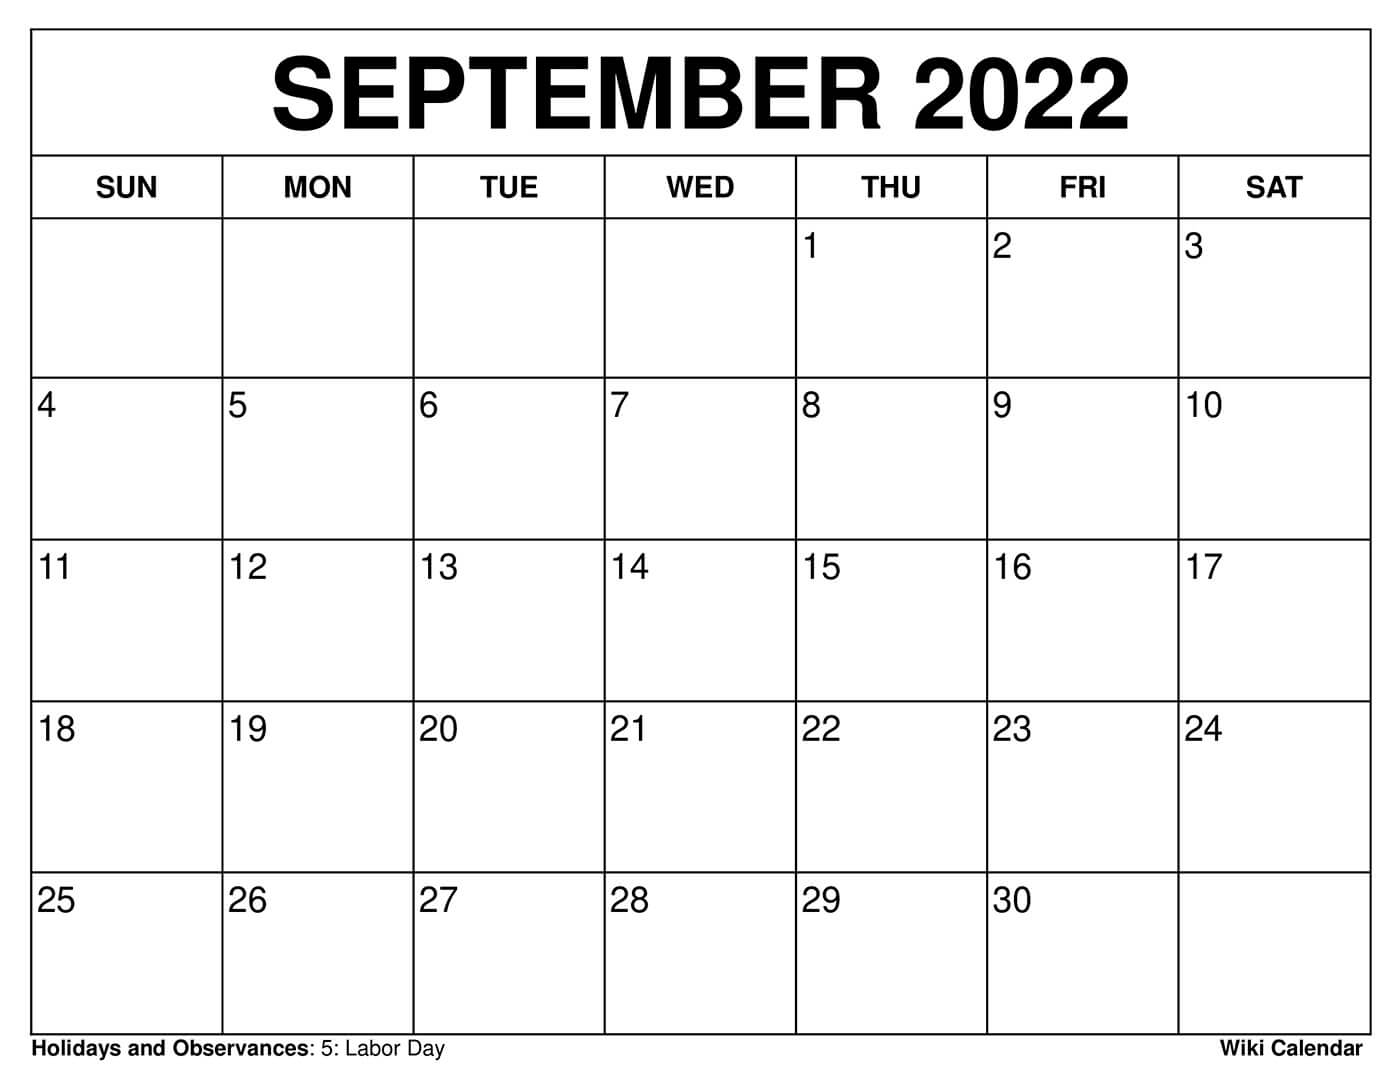 Free Printable Sept 2022 Calendar Free Printable September 2022 Calendars - Wiki Calendar